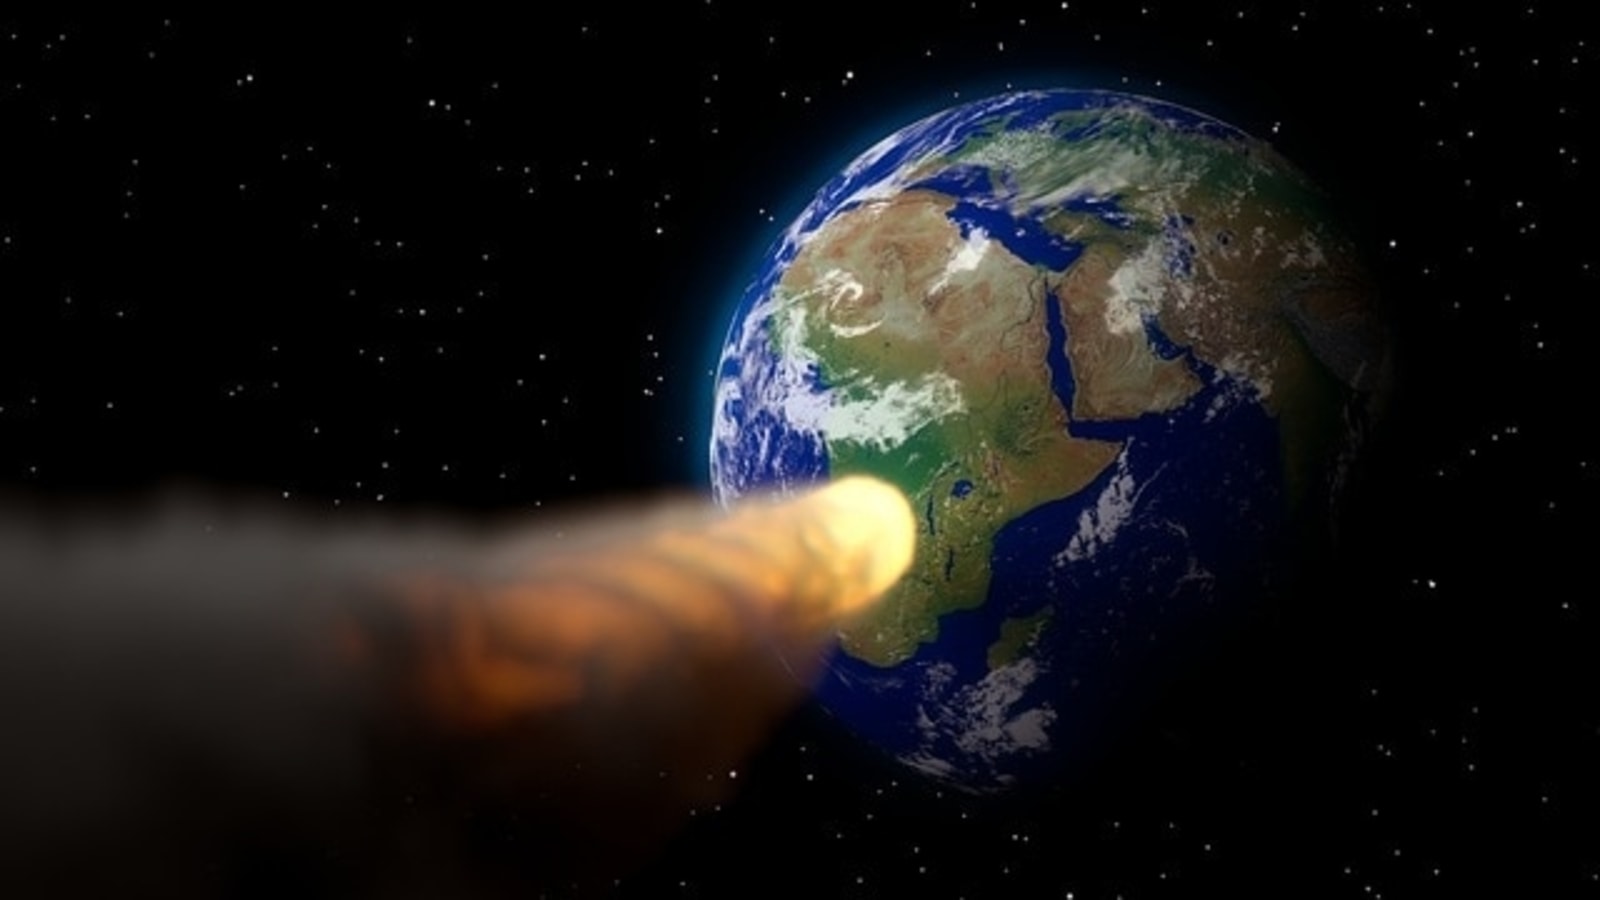 Un astéroïde de 262 pieds parmi 5 étoiles s’approchant de la Terre, selon la NASA